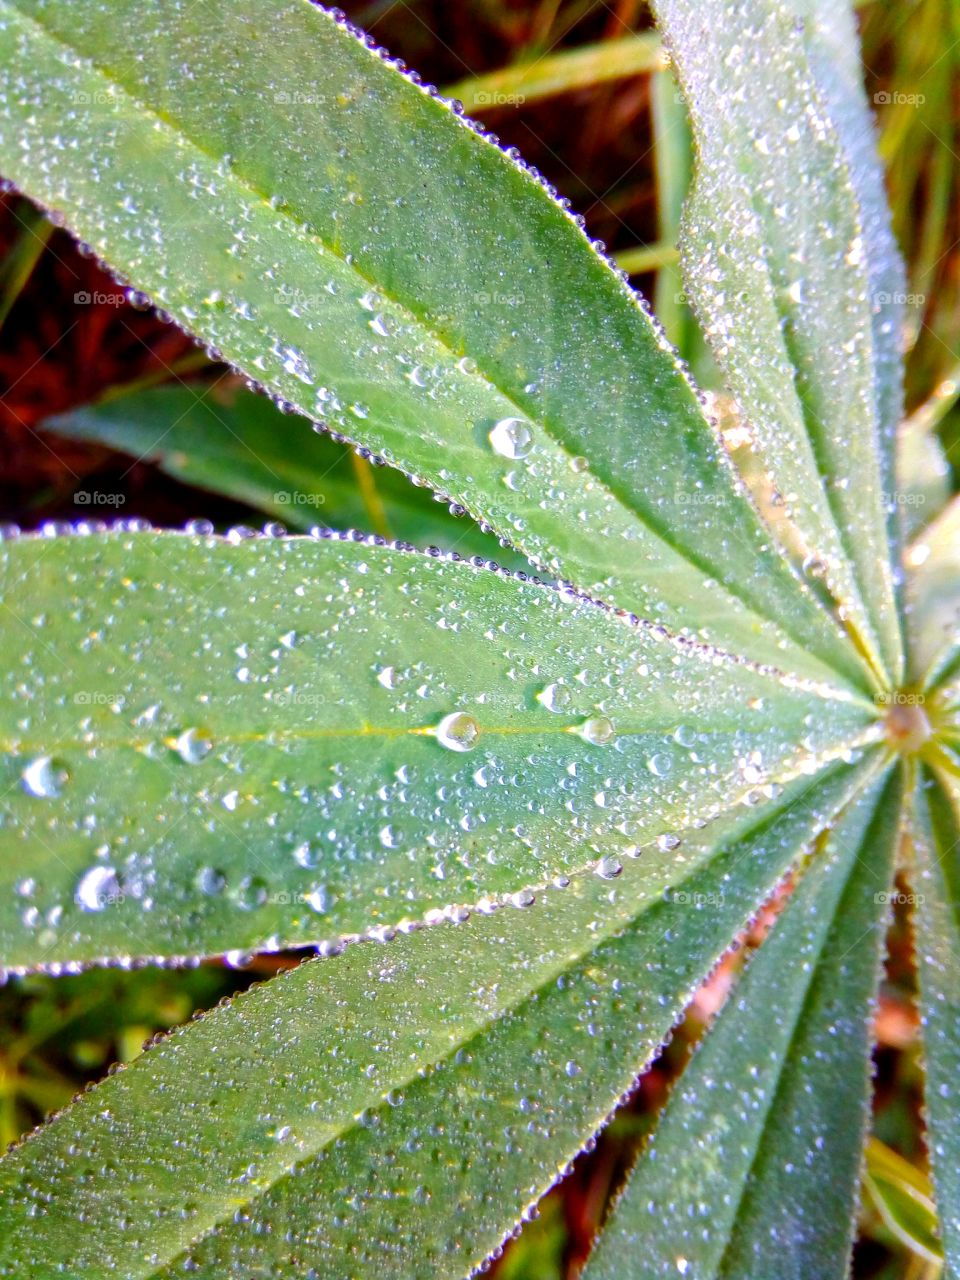 dew on leaves